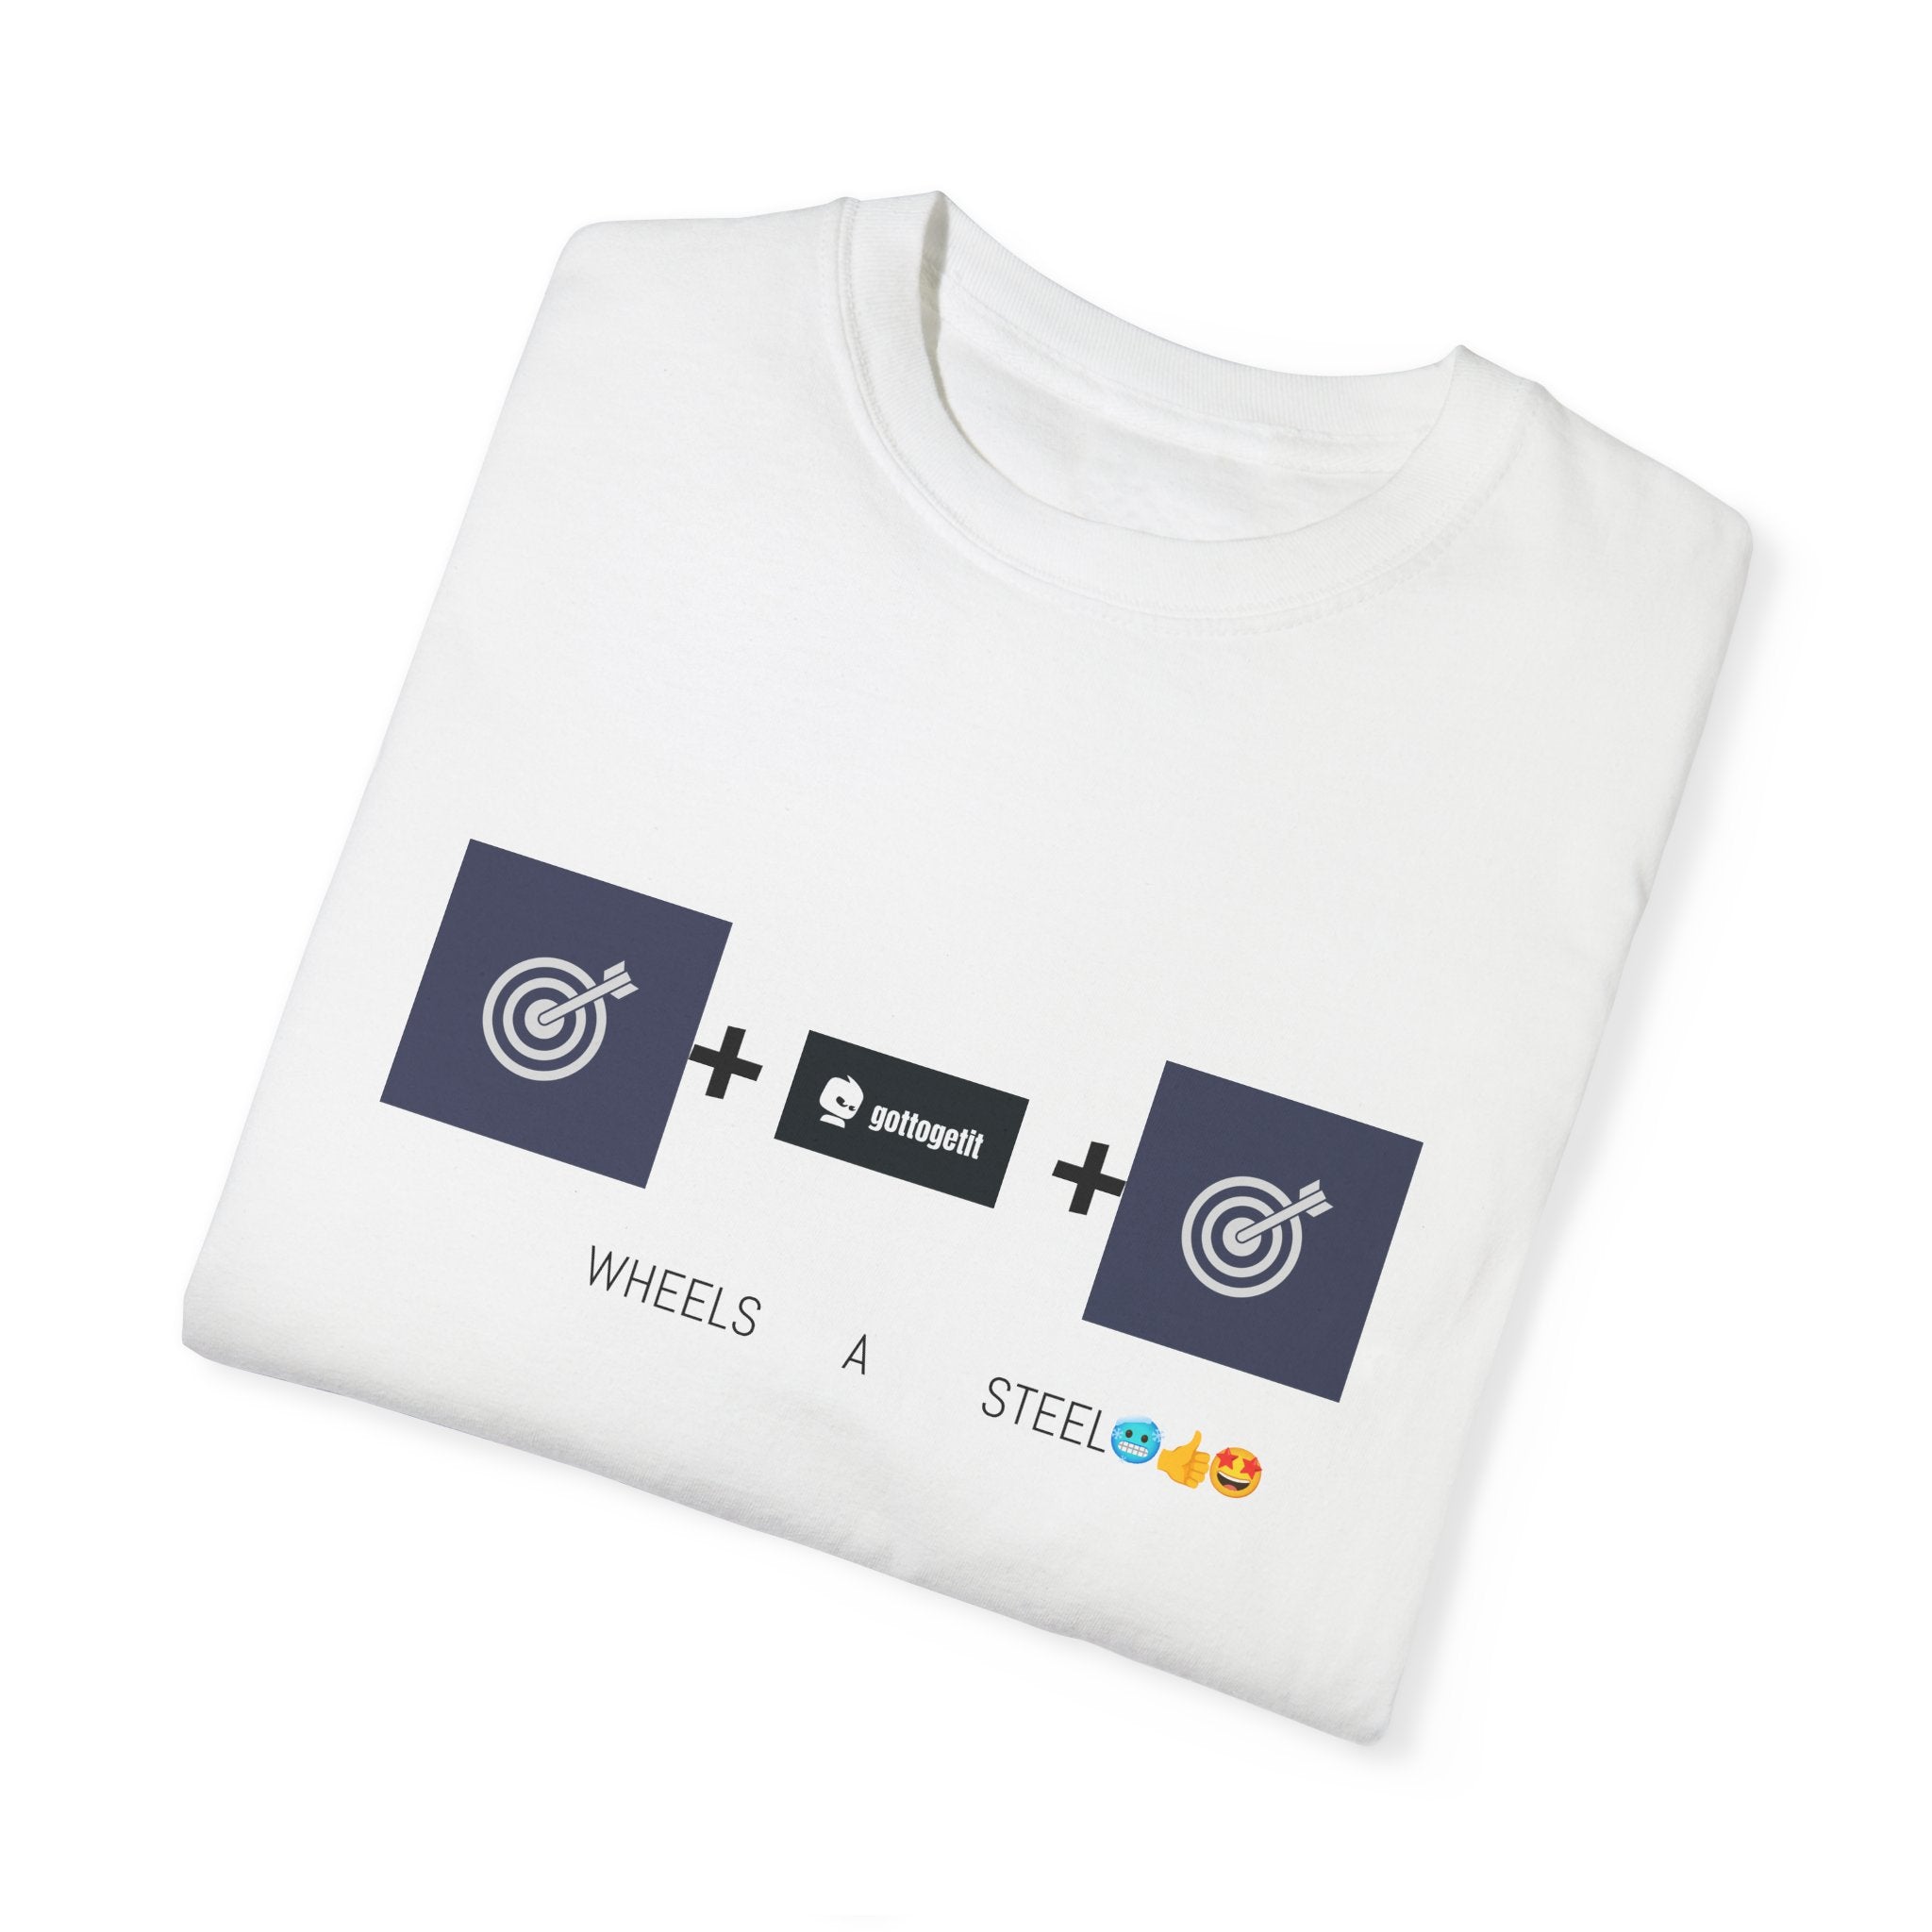 TTABLE WHEELS A STEEL Unisex Garment-Dyed T-shirt